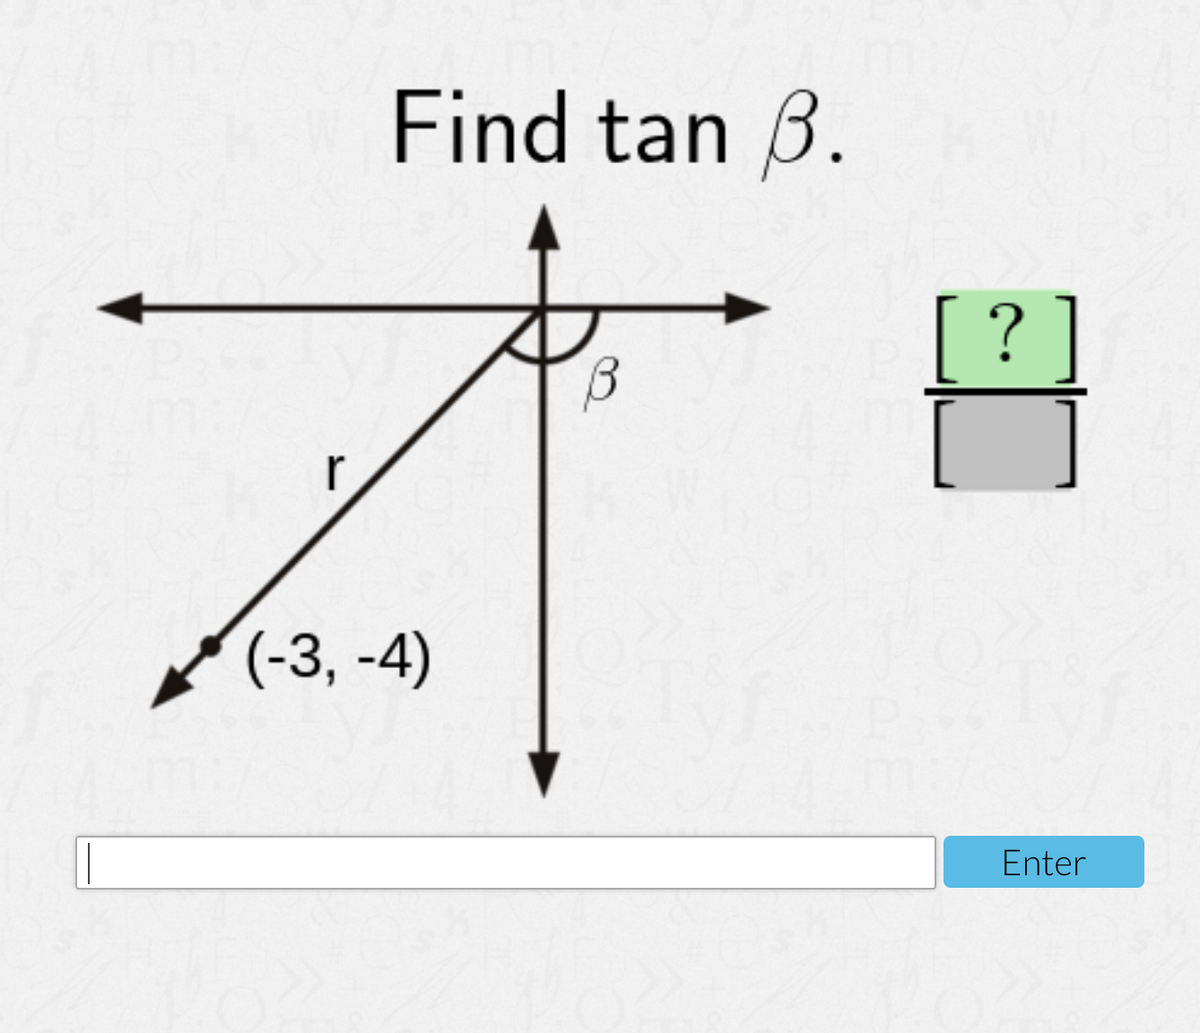 Find tan 3.
[?
r
(-3, -4)
Enter
